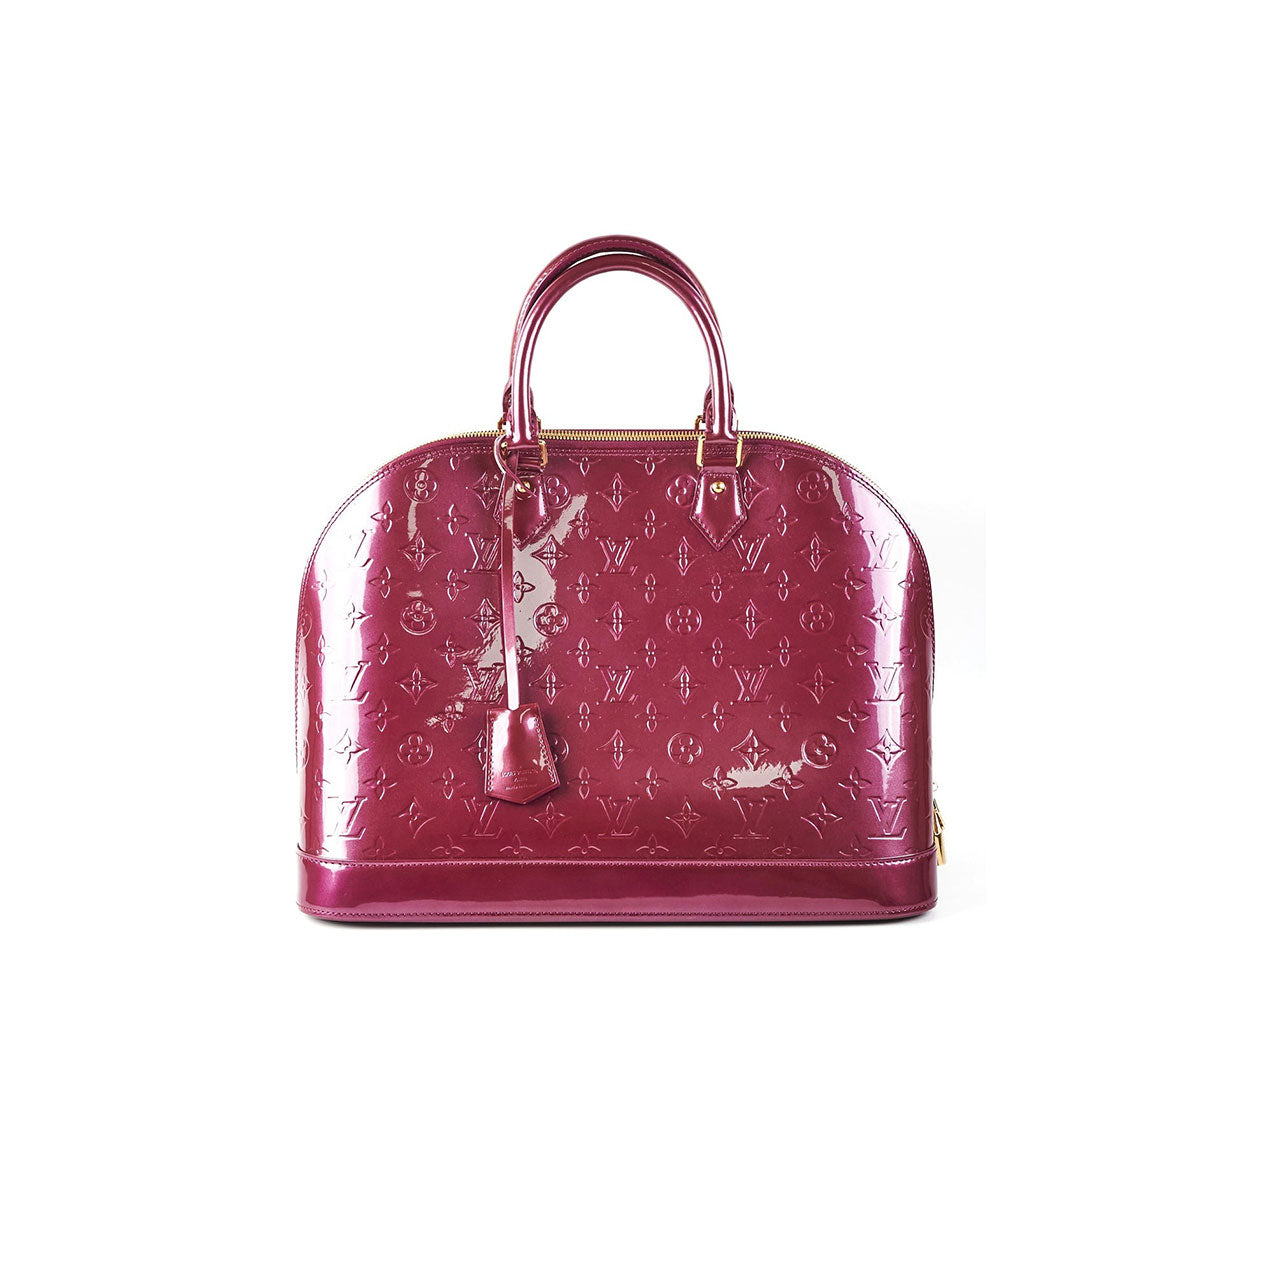 Louis Vuitton OnTheGo Handbag Storage Size Guide – Luxury Display